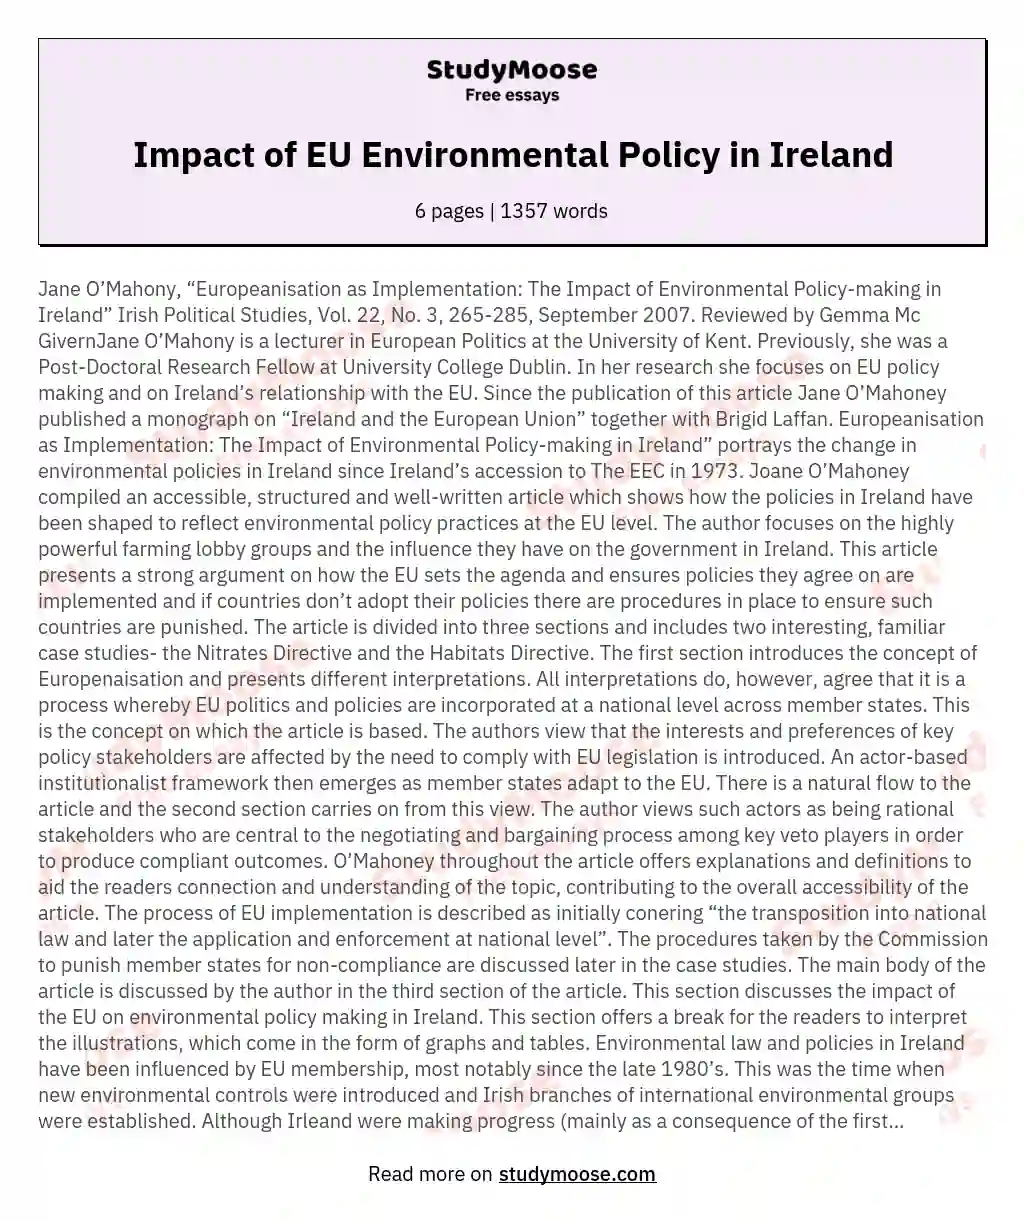 Impact of EU Environmental Policy in Ireland essay